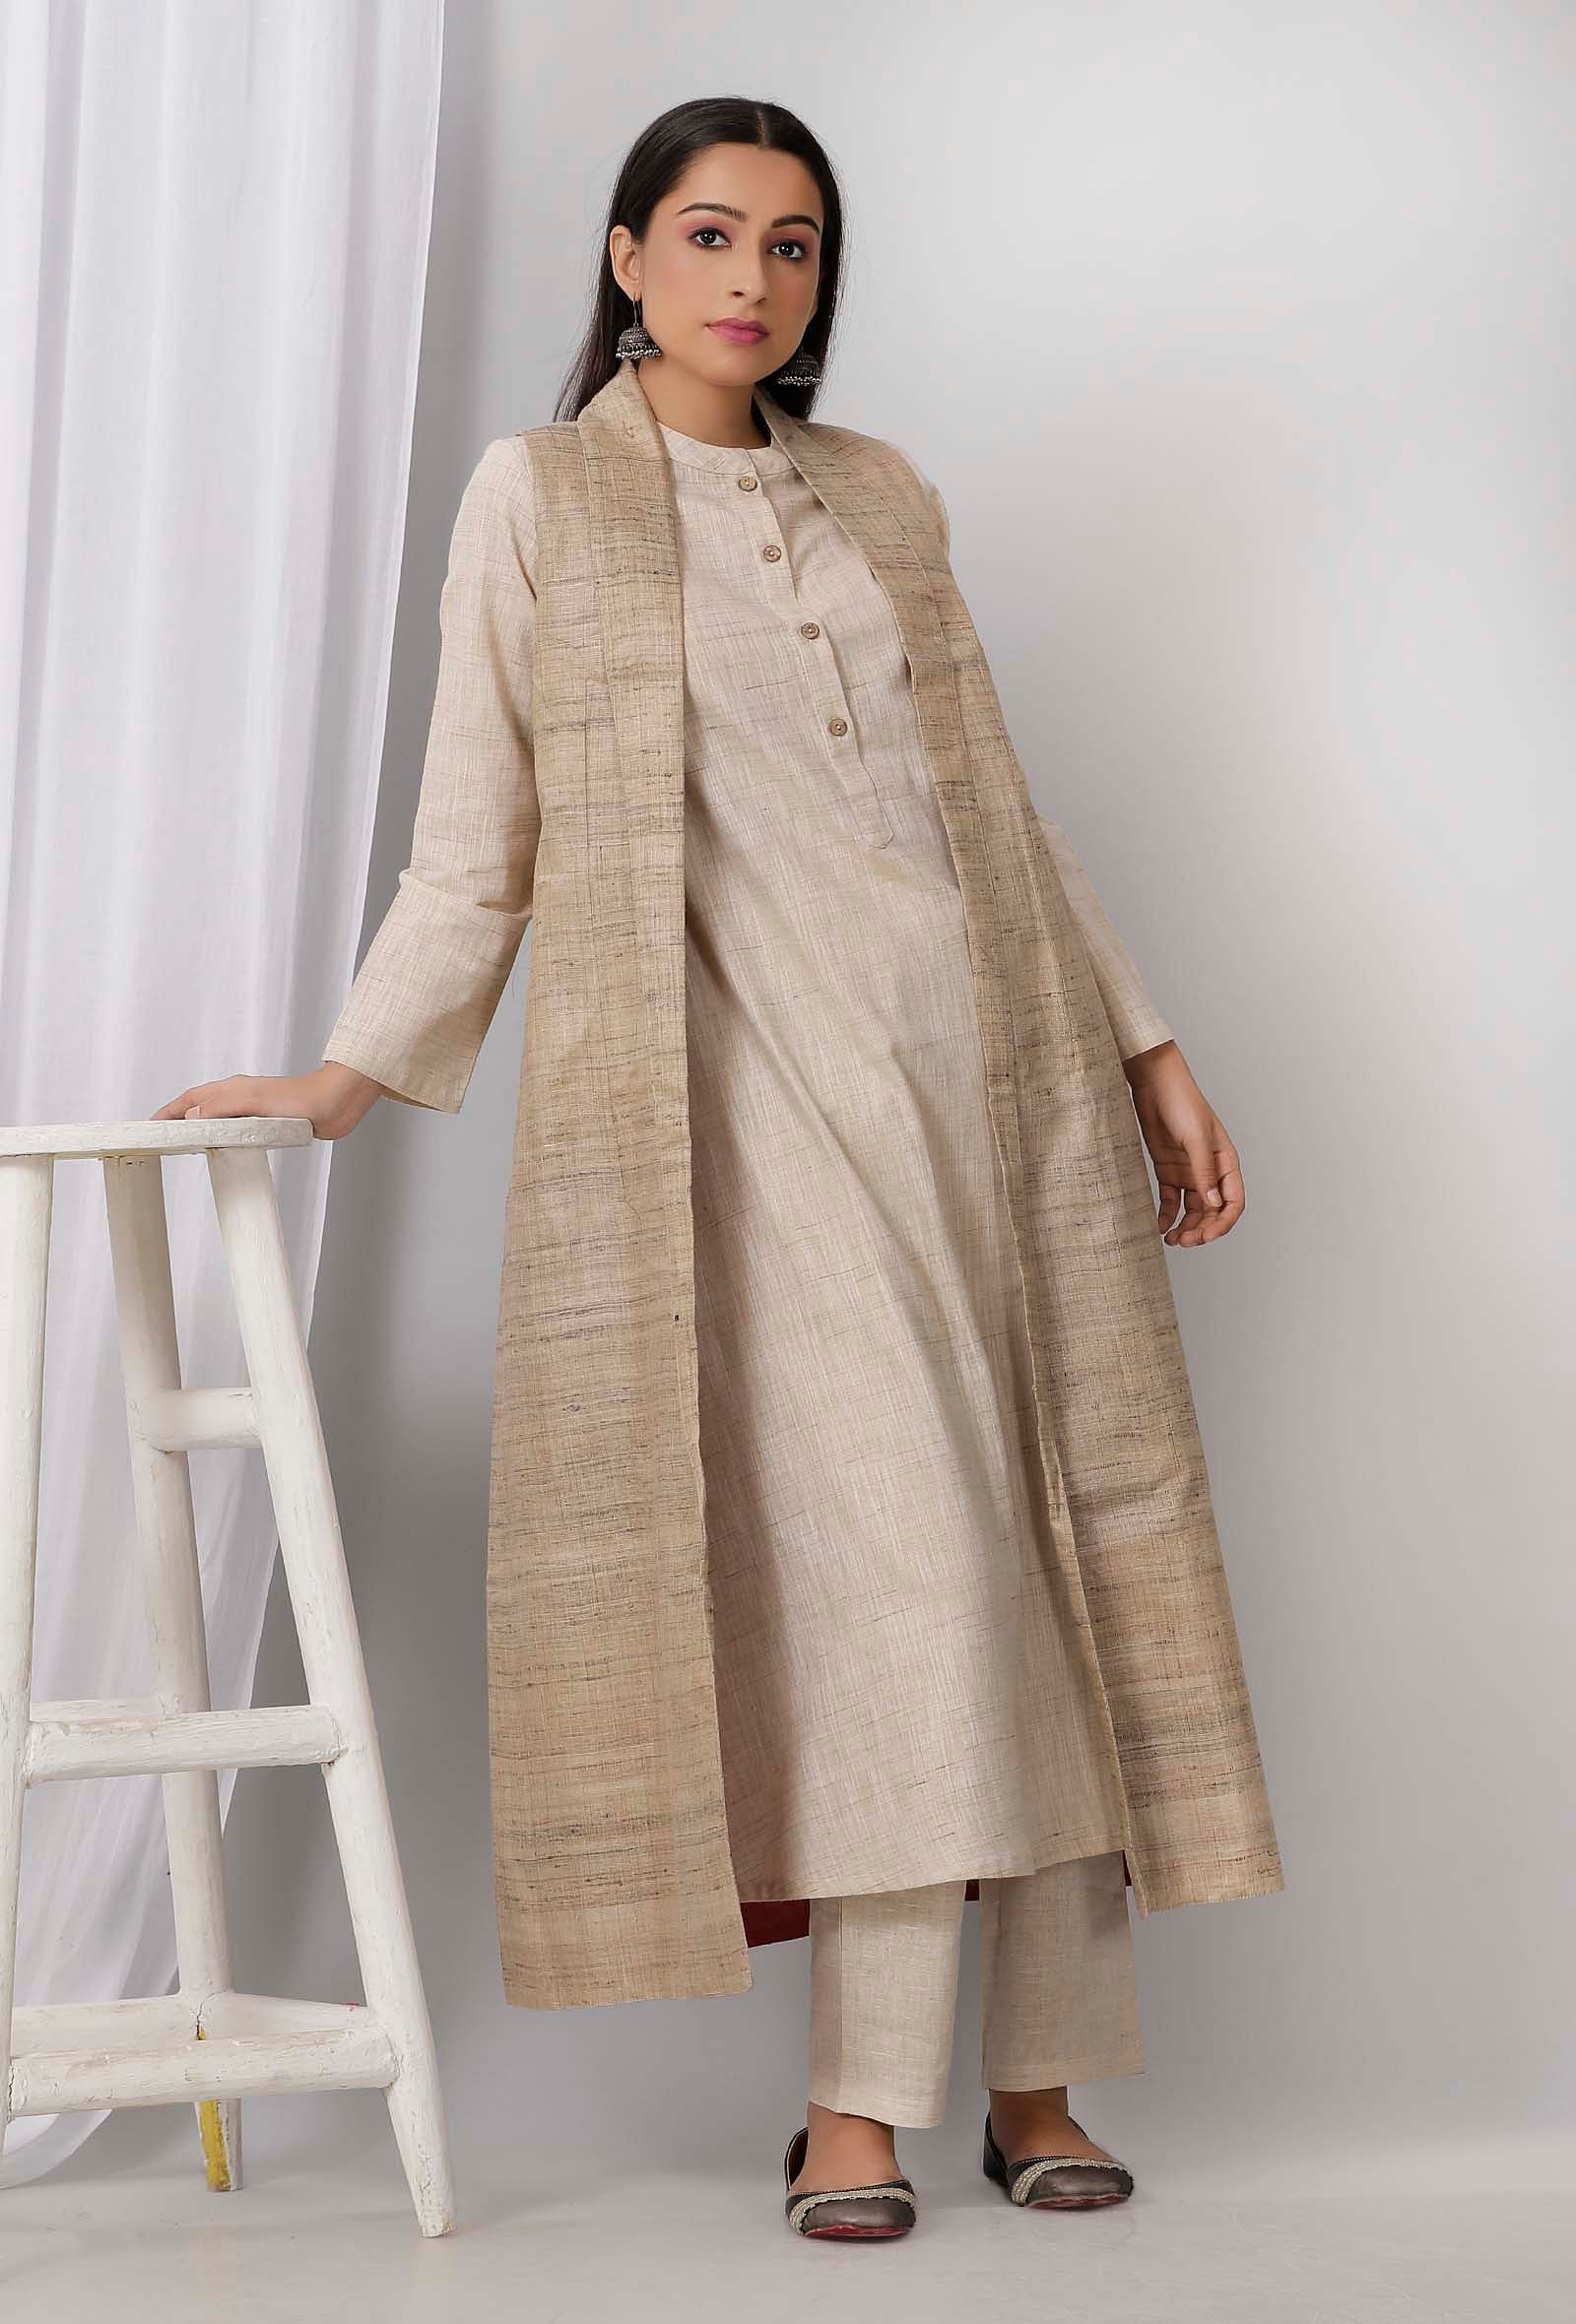 Buy See Designs Men Cream Color Solid Khadi Nehru Jacket online